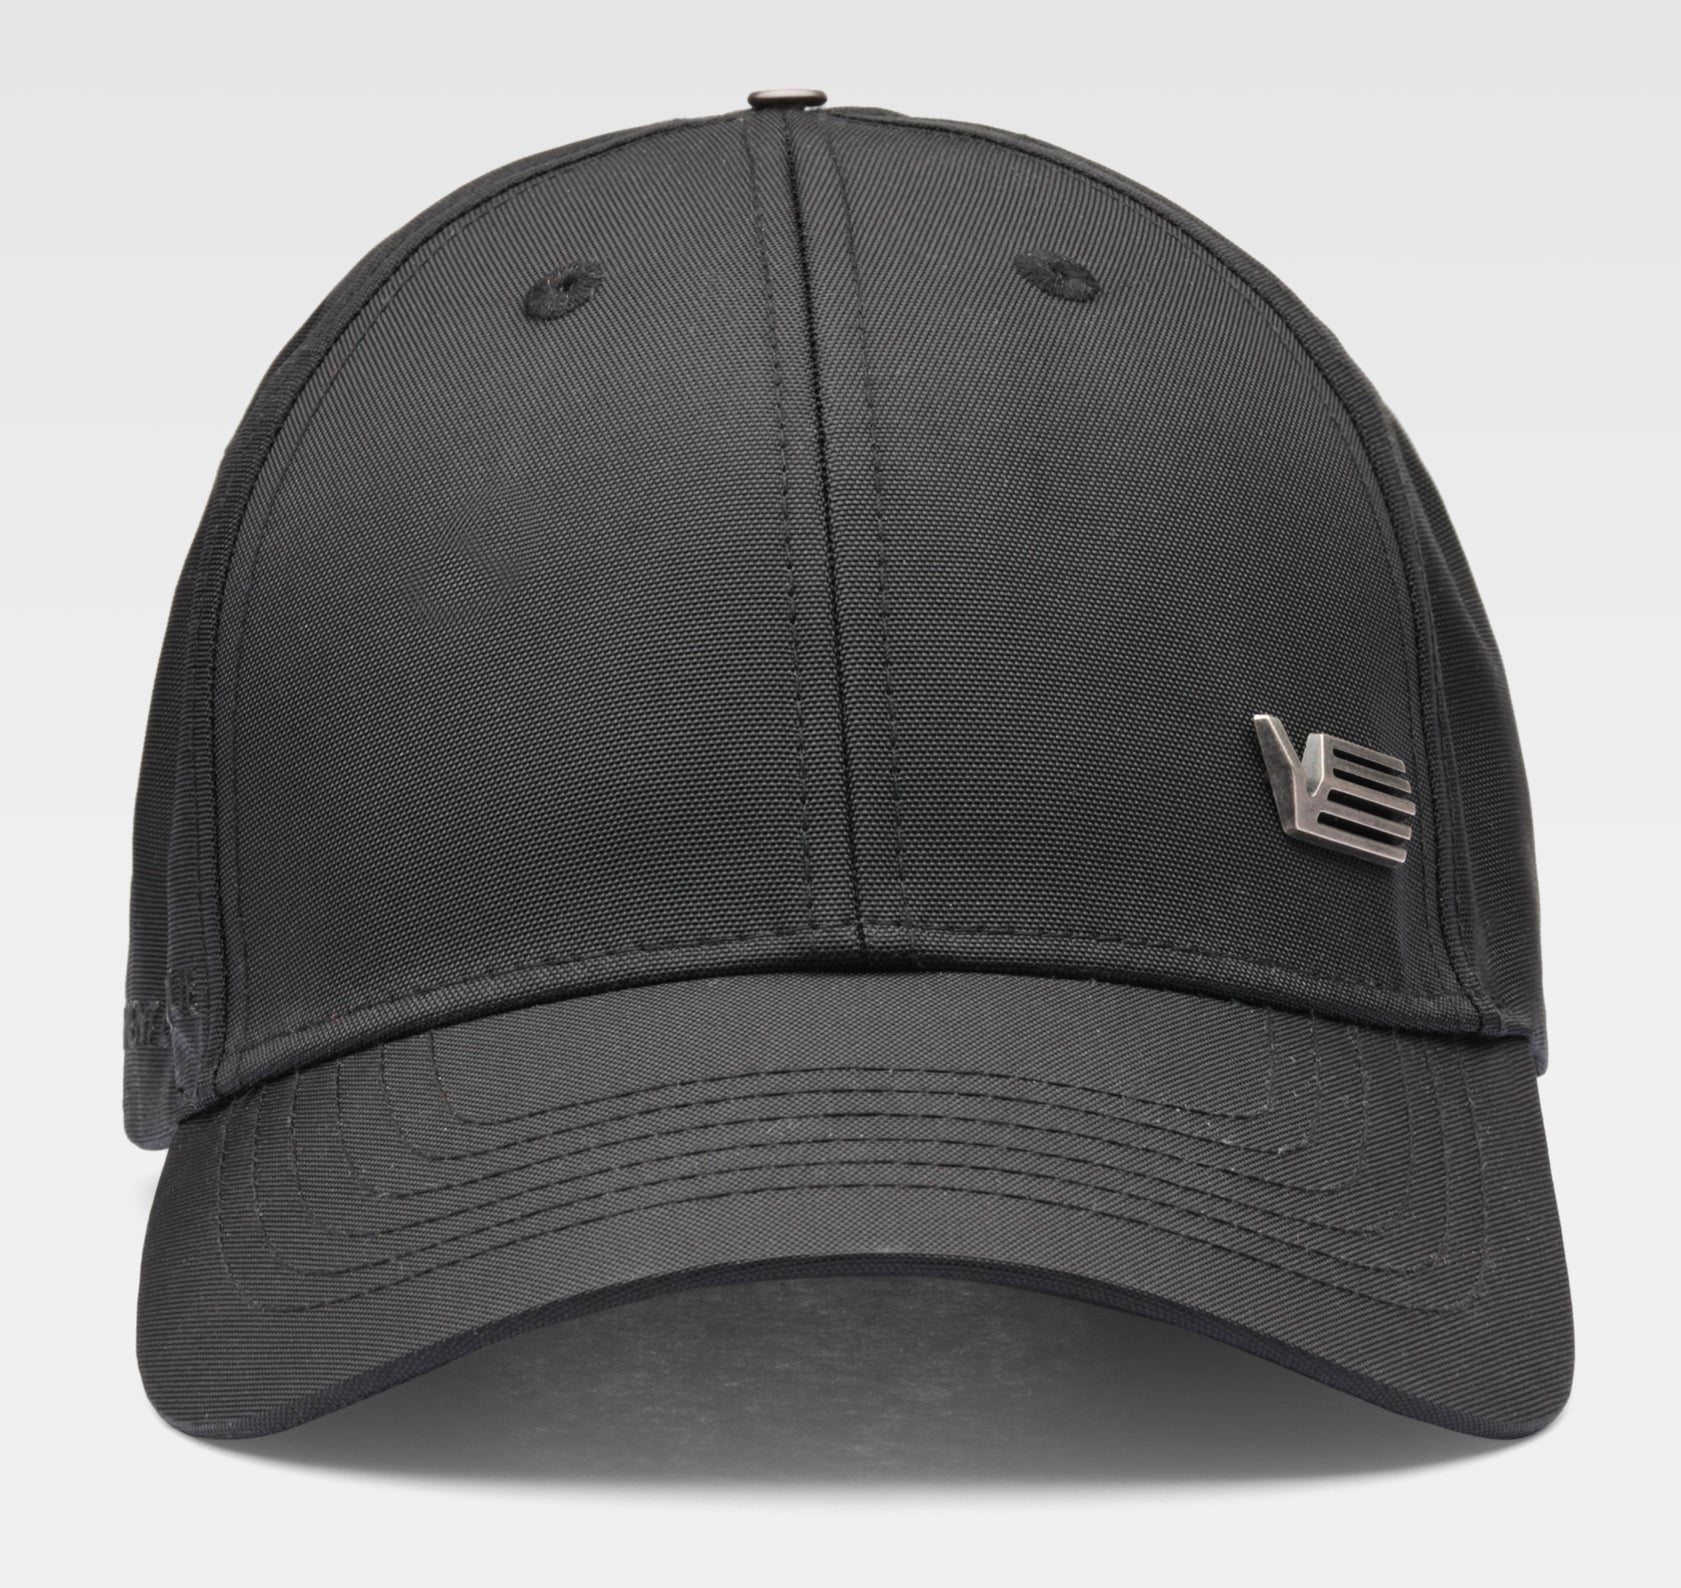 Black cap with metallic logo